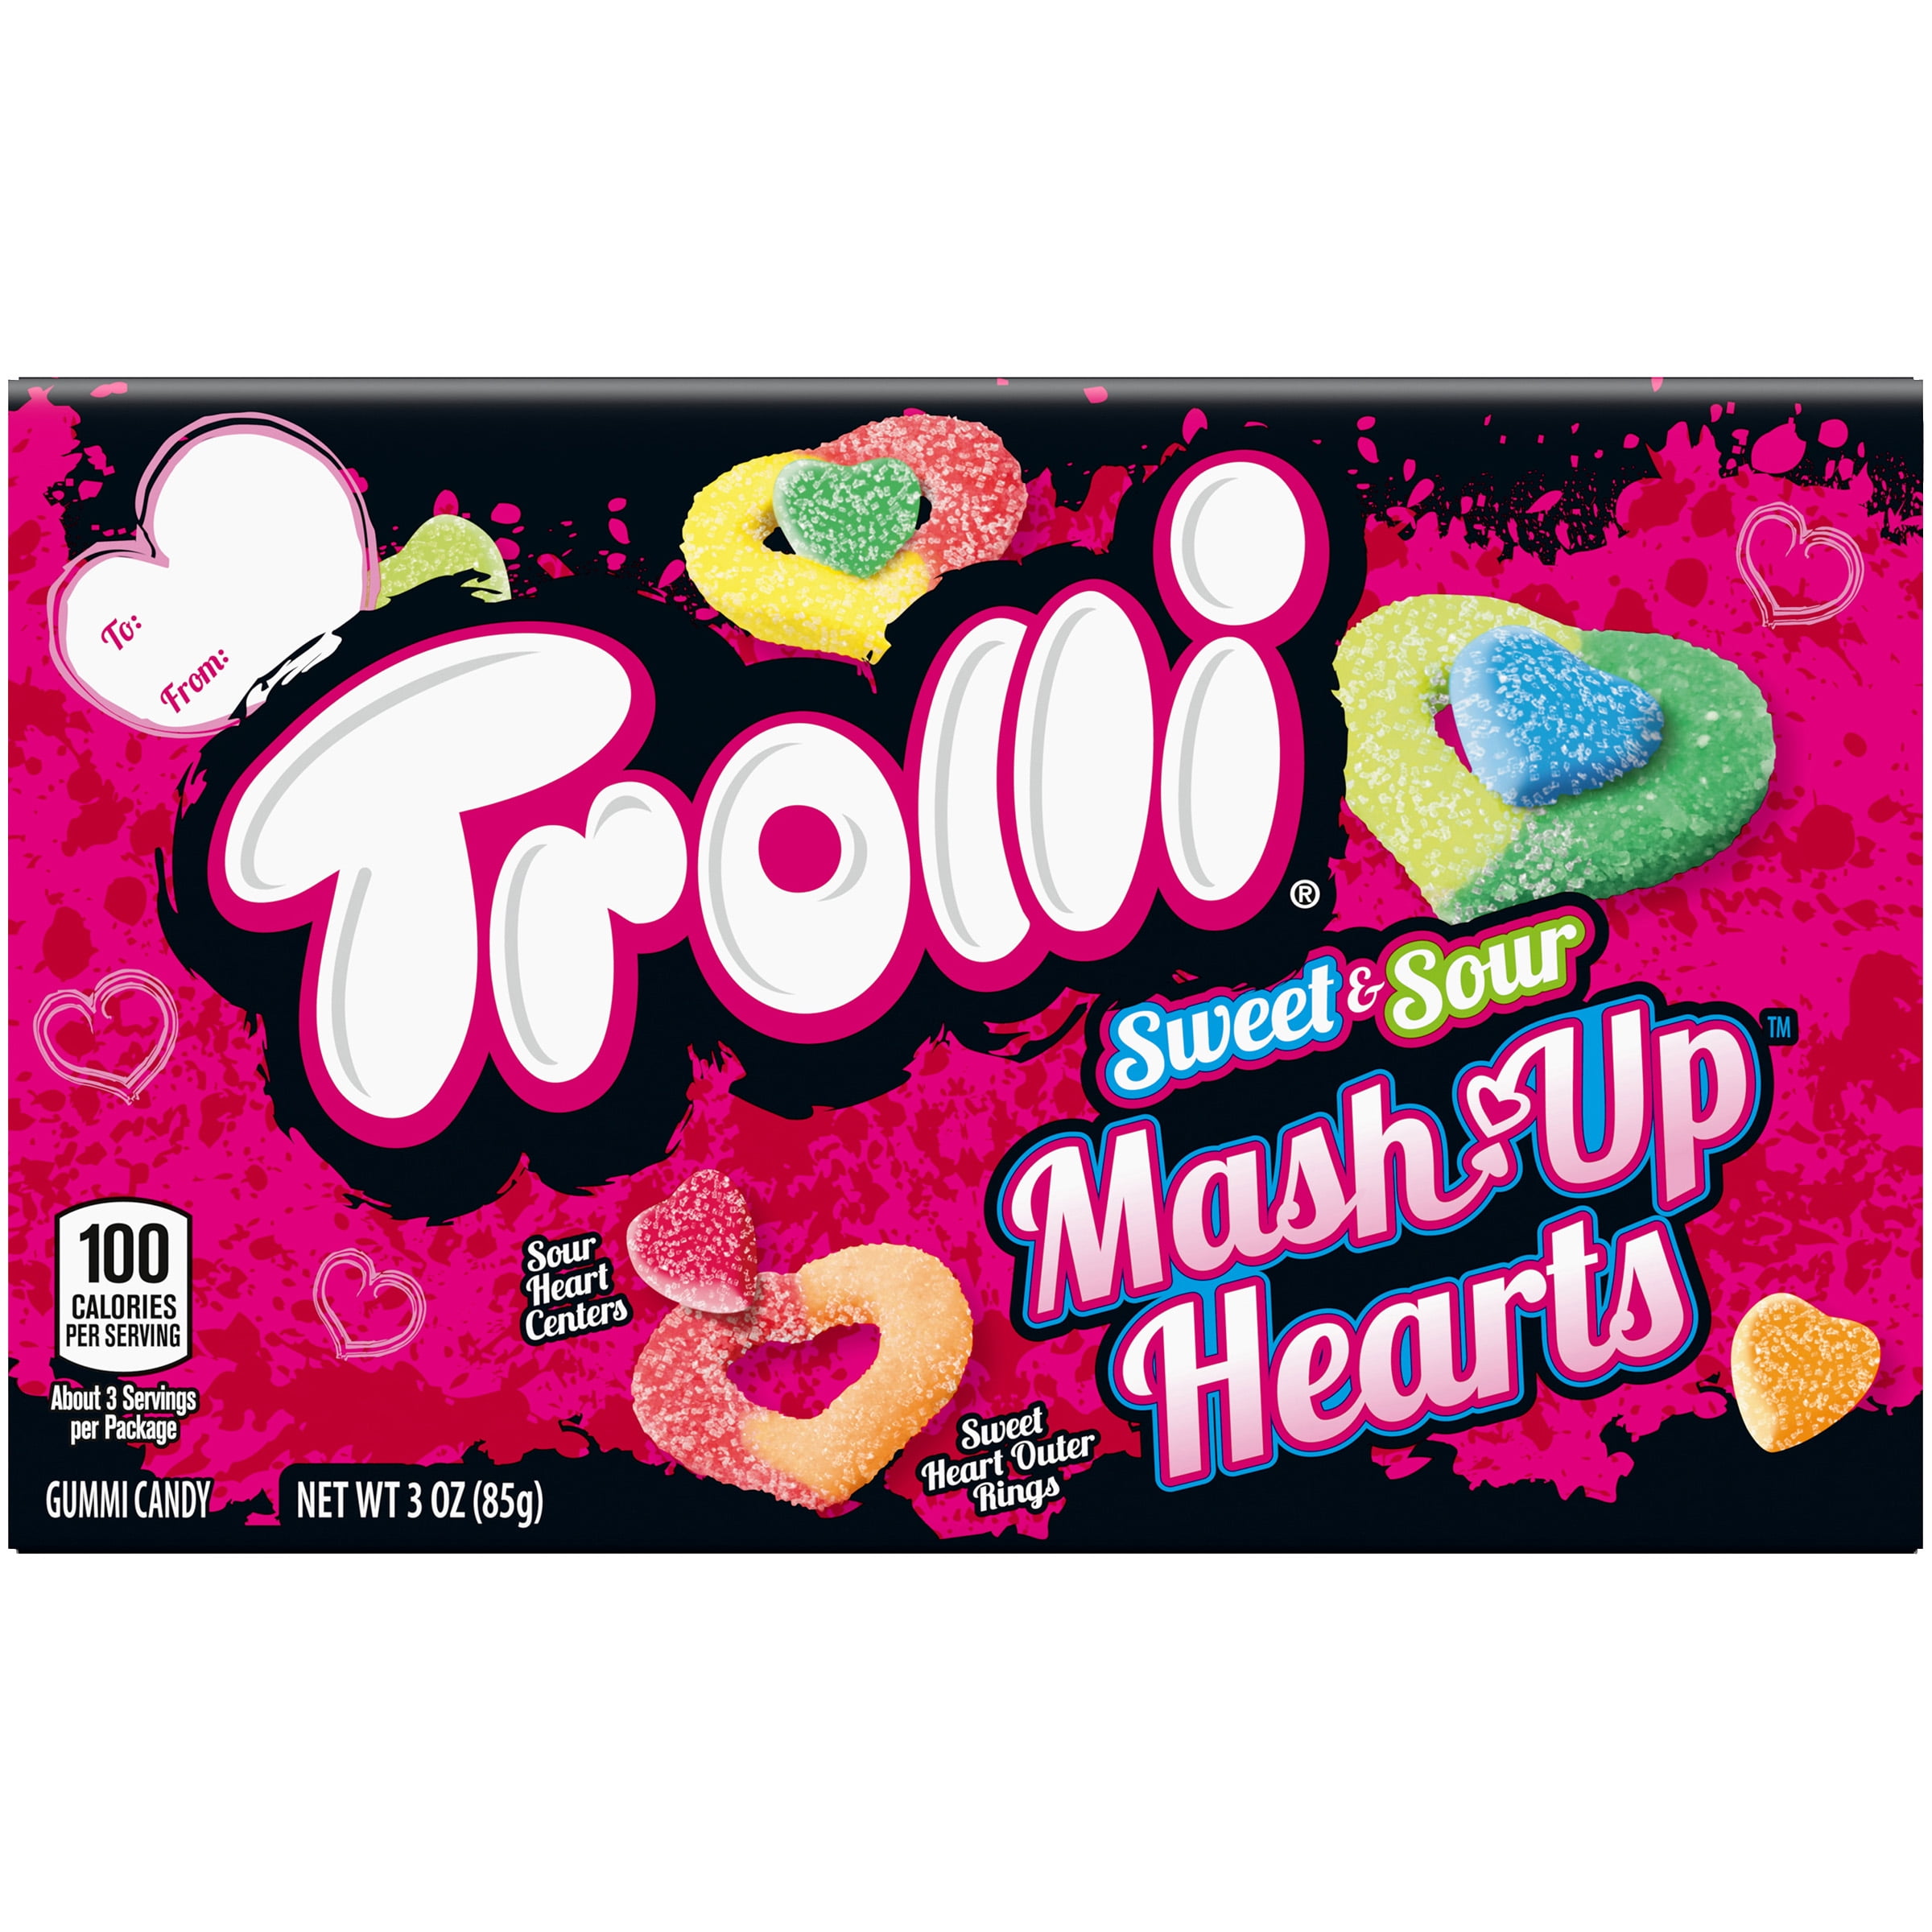 Trolli Sweet & Sour Mash Up Hearts Gummy Candy, 3oz Box